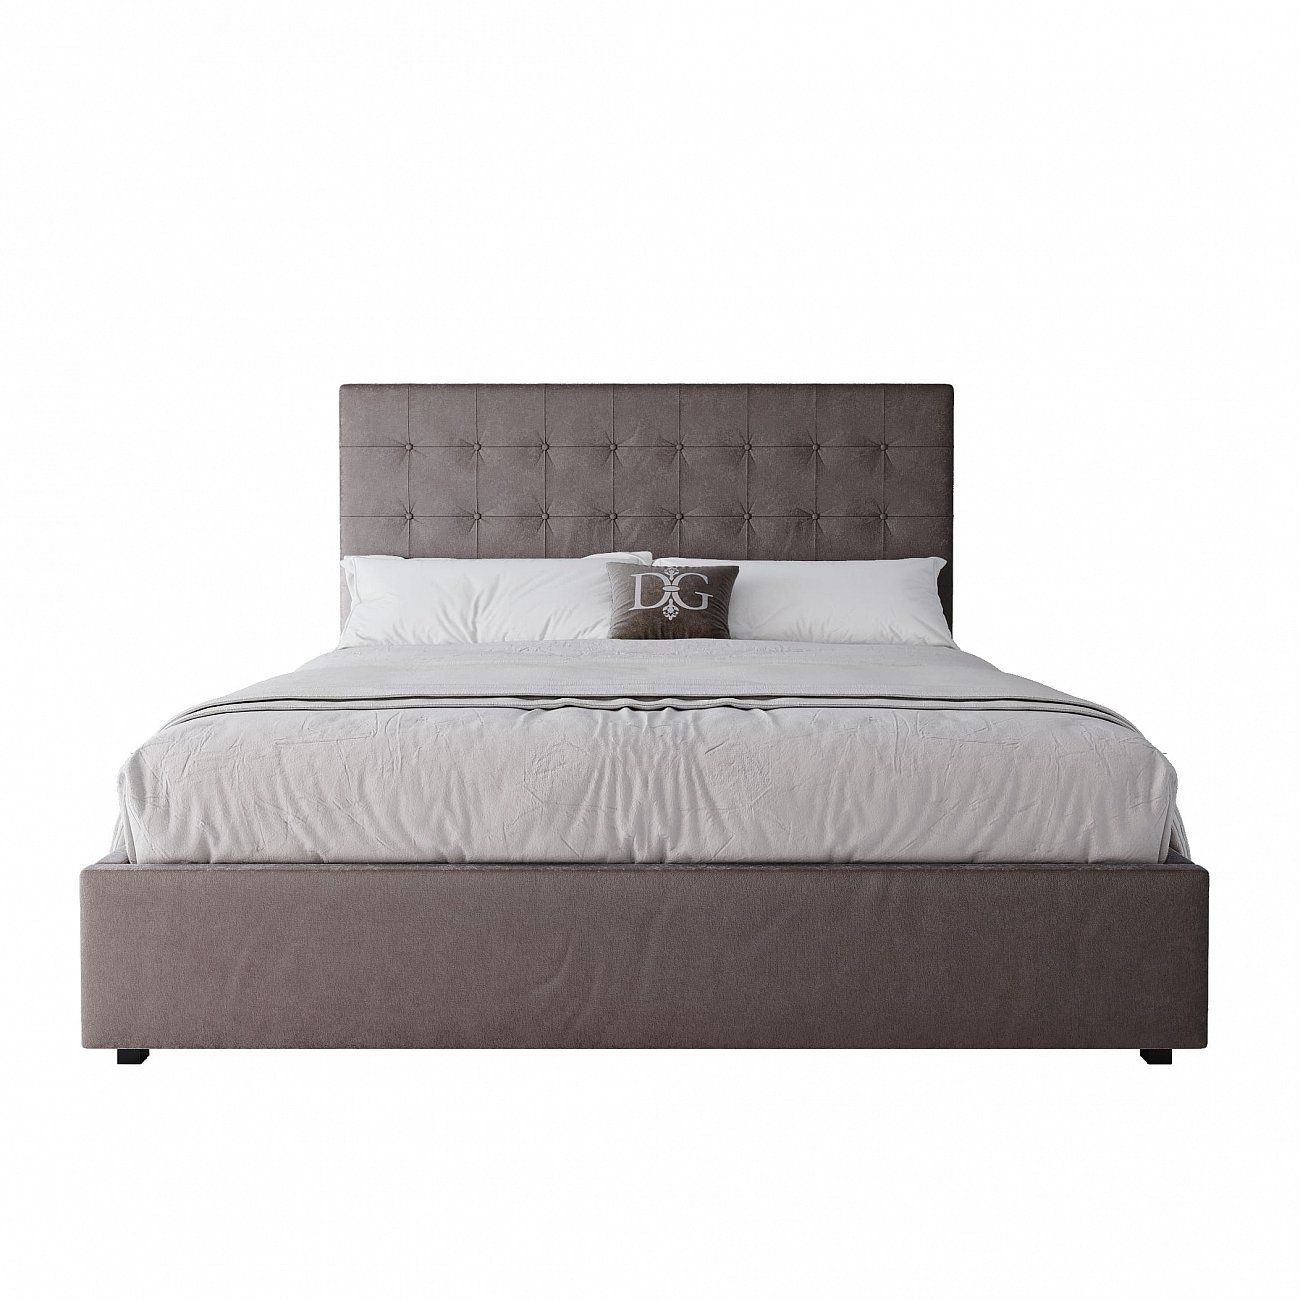 Double bed 180x200 cm light brown Royal Black